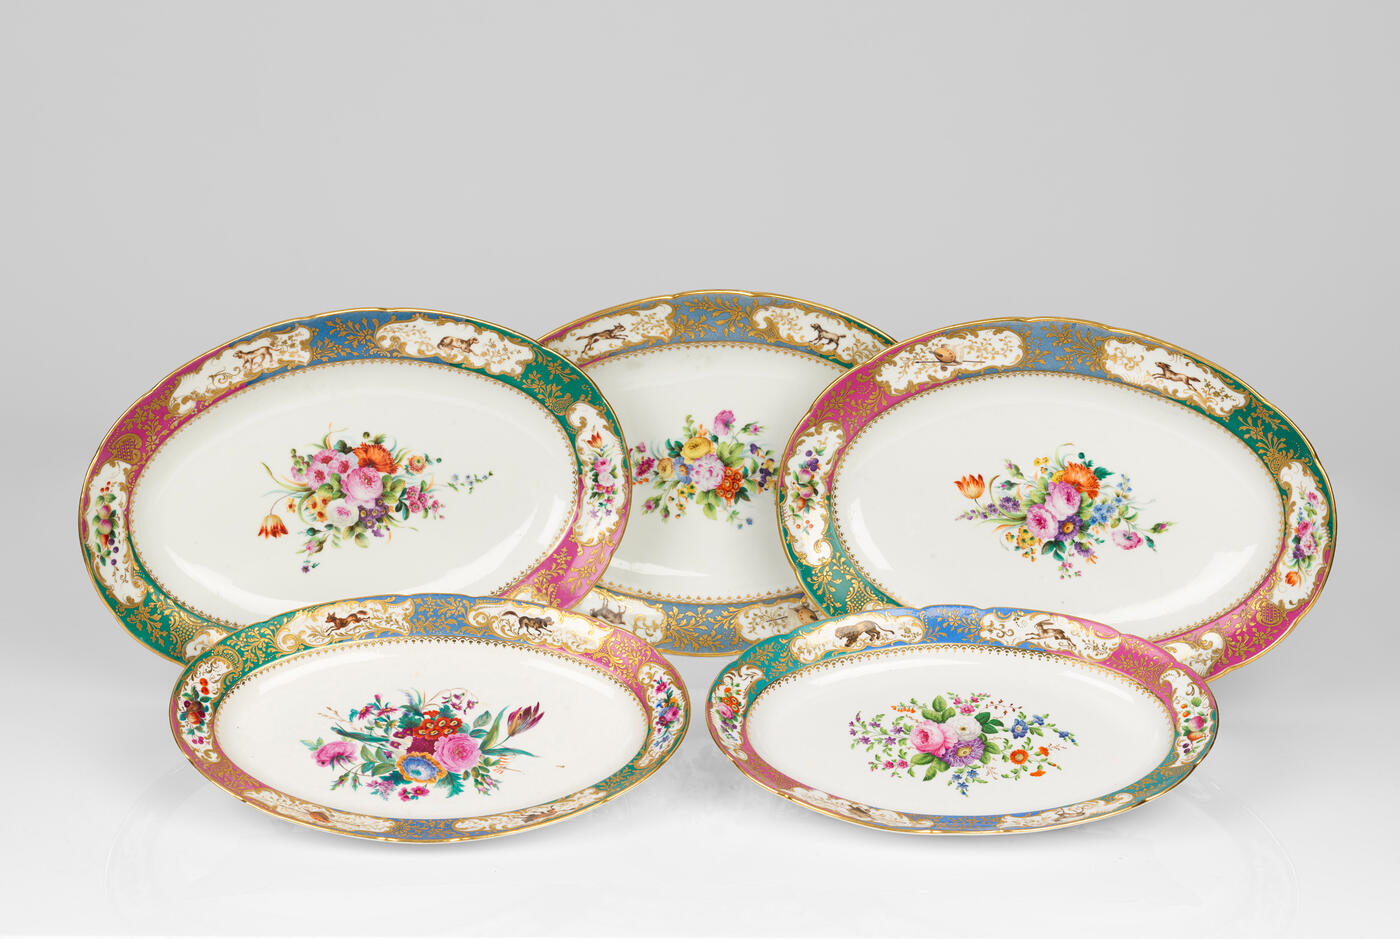 A Set of Five Platters from the Grand Duke Mikhail Pavlovich Service